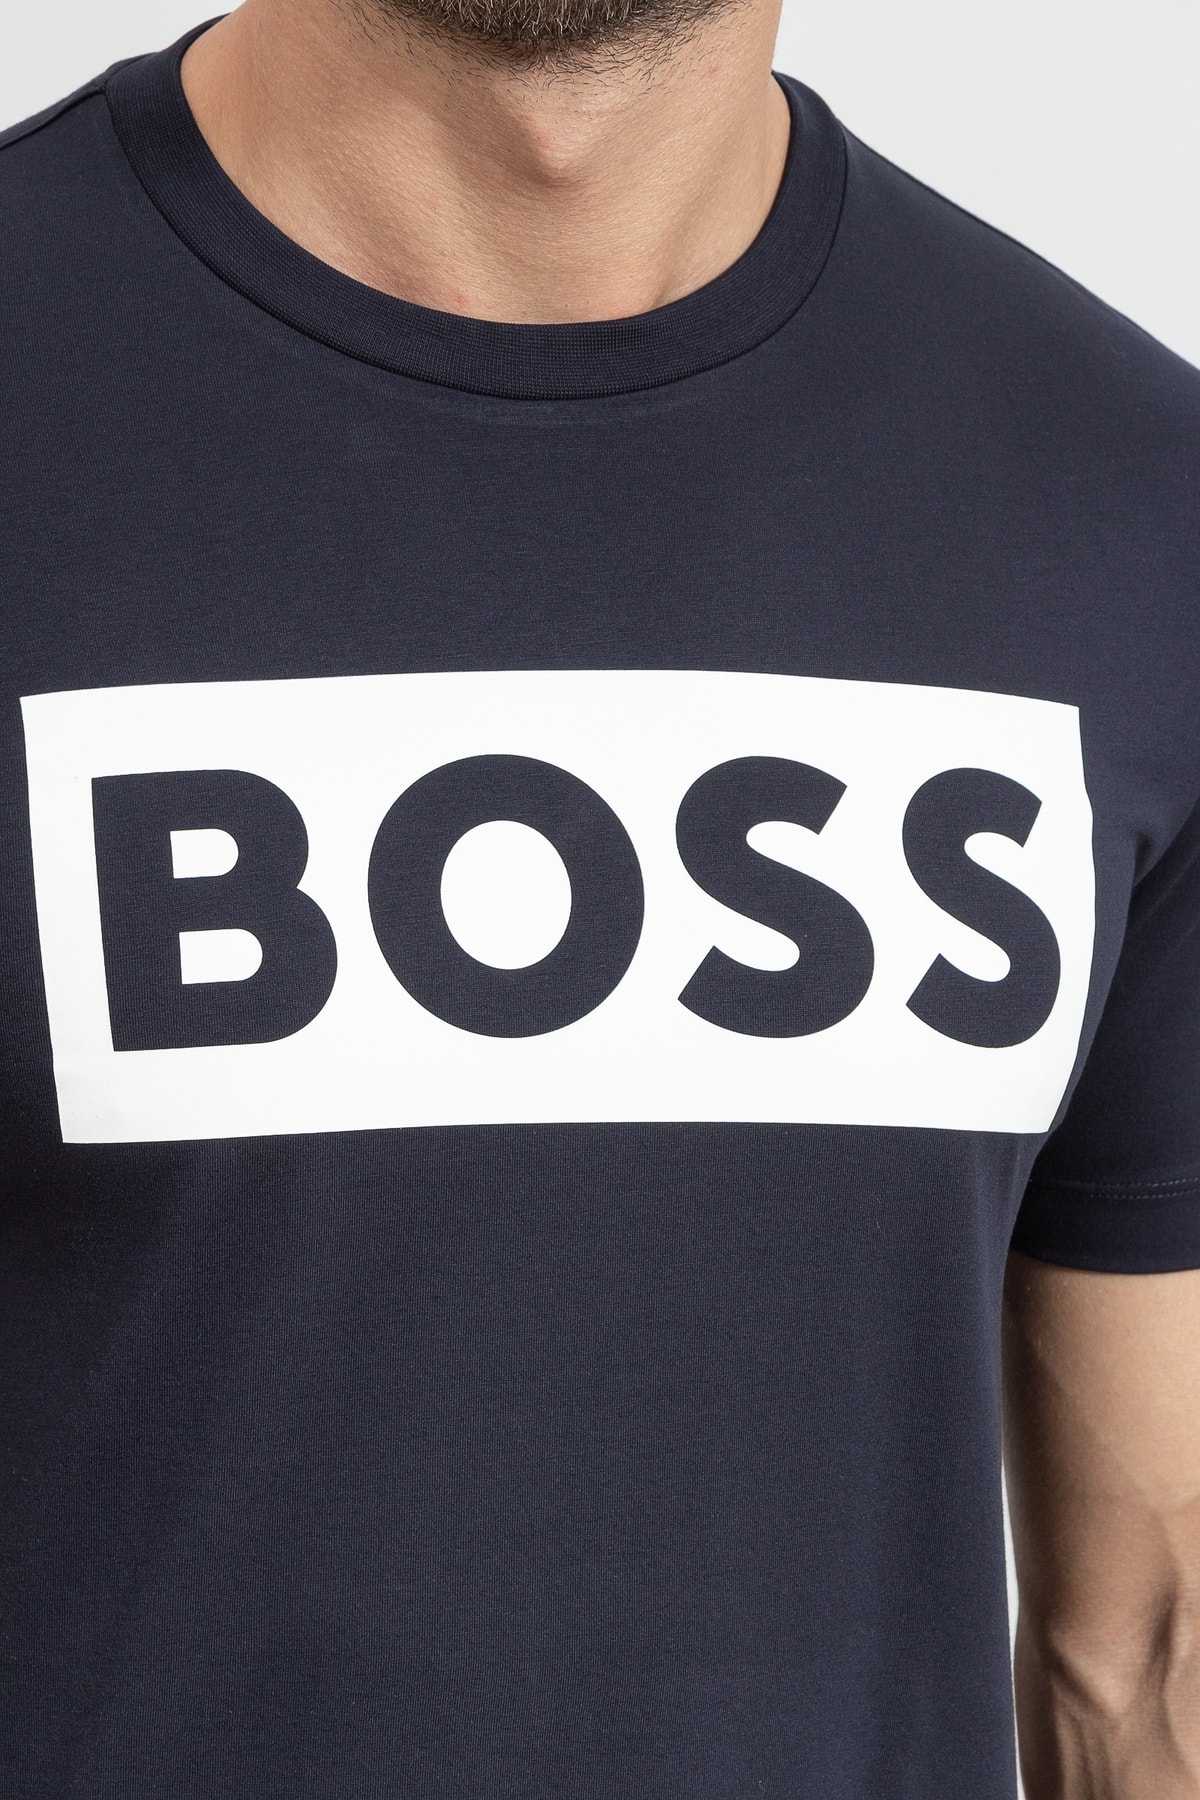 Hugo Boss Boss Tiburt Erkek Bisiklet Yaka T-shirt50471696 PG7944